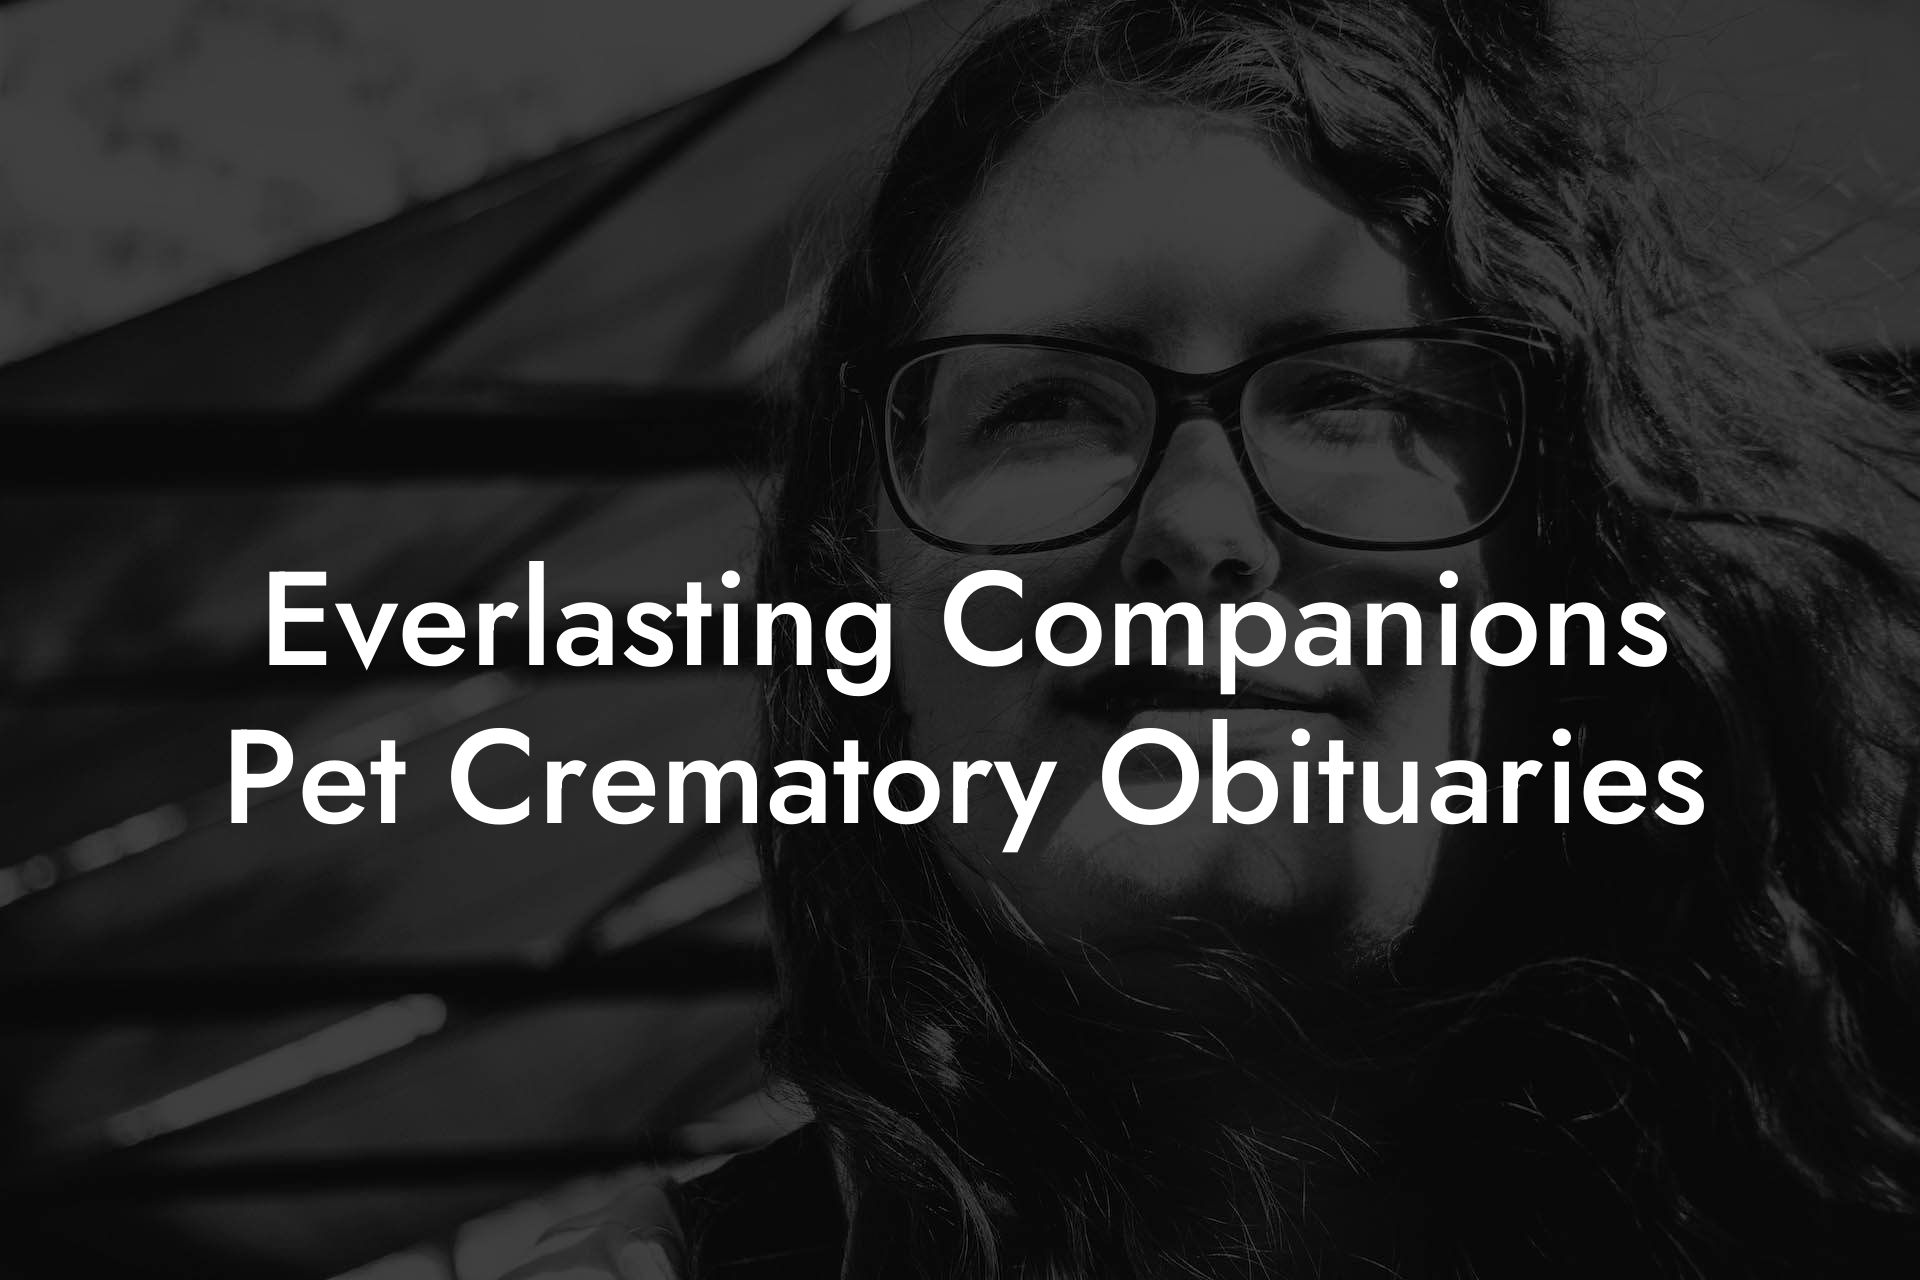 Everlasting Companions Pet Crematory Obituaries